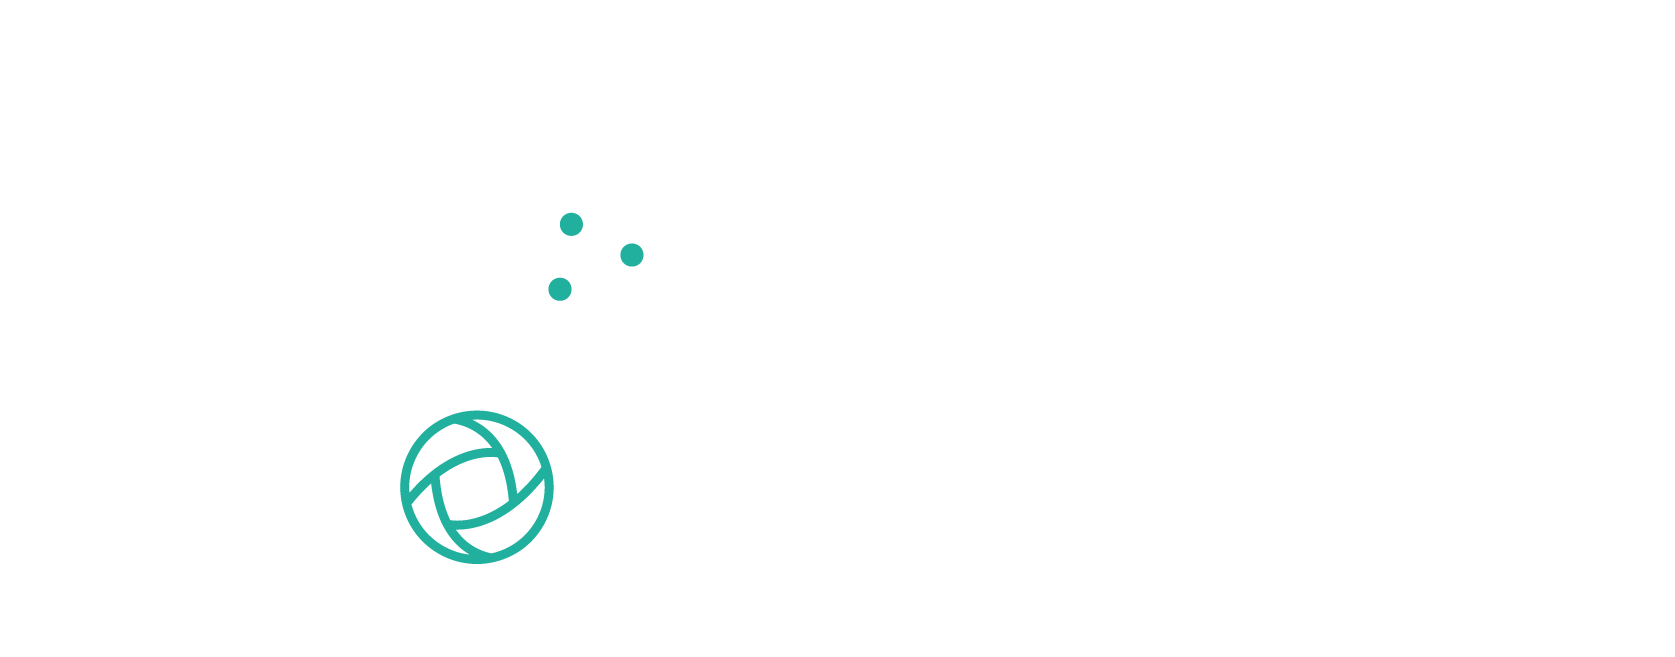 Mifra Academy